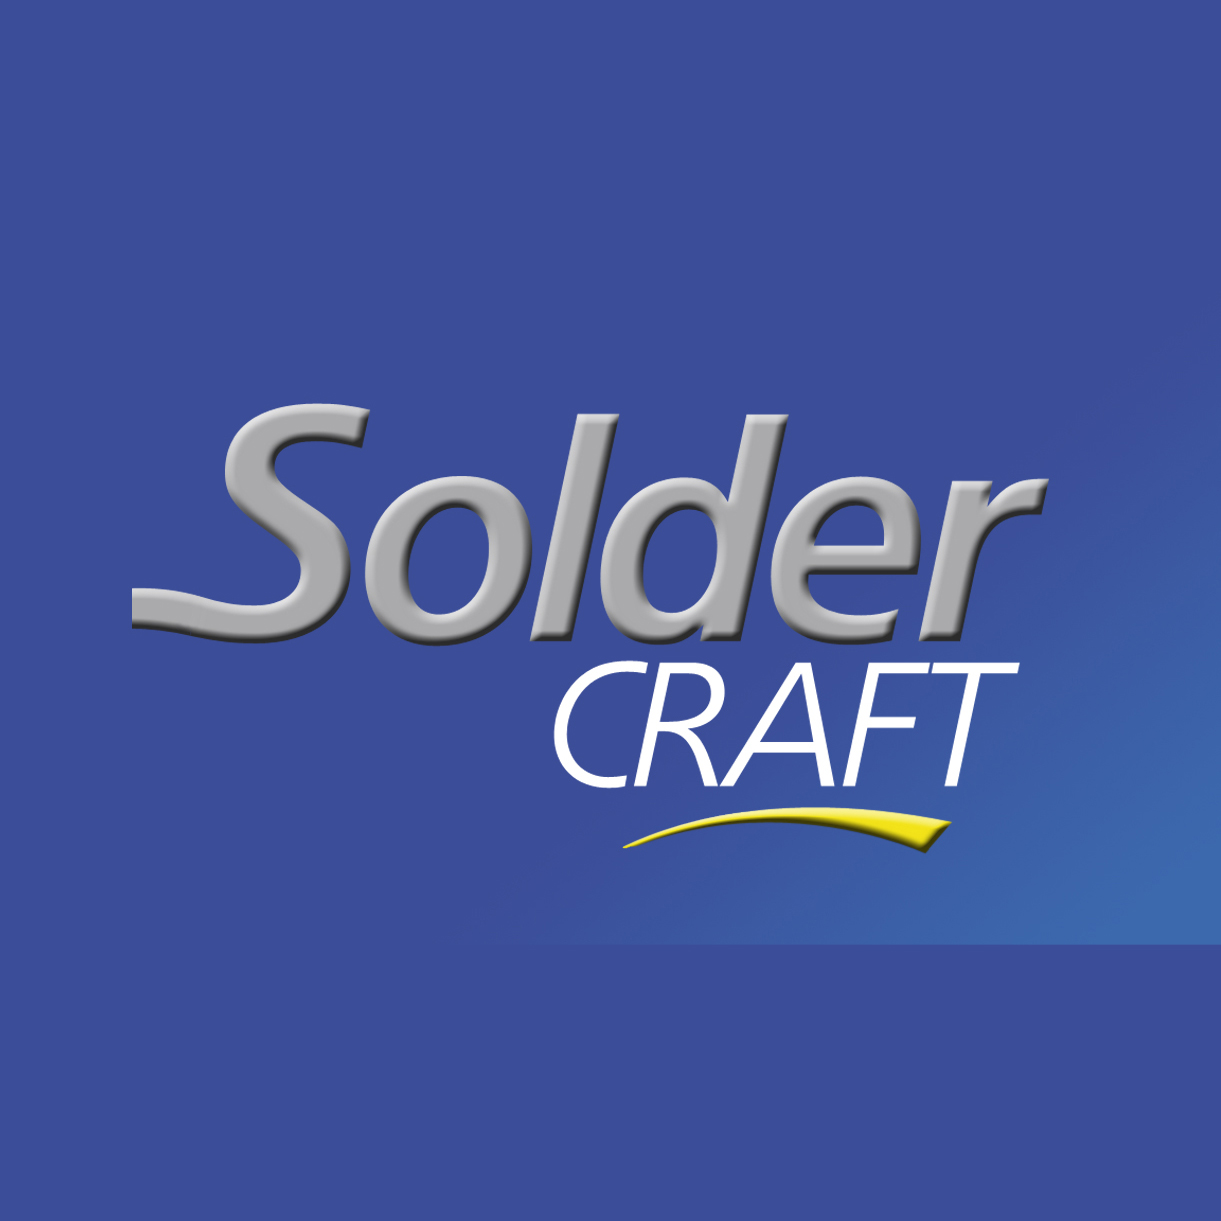 Soldercraft